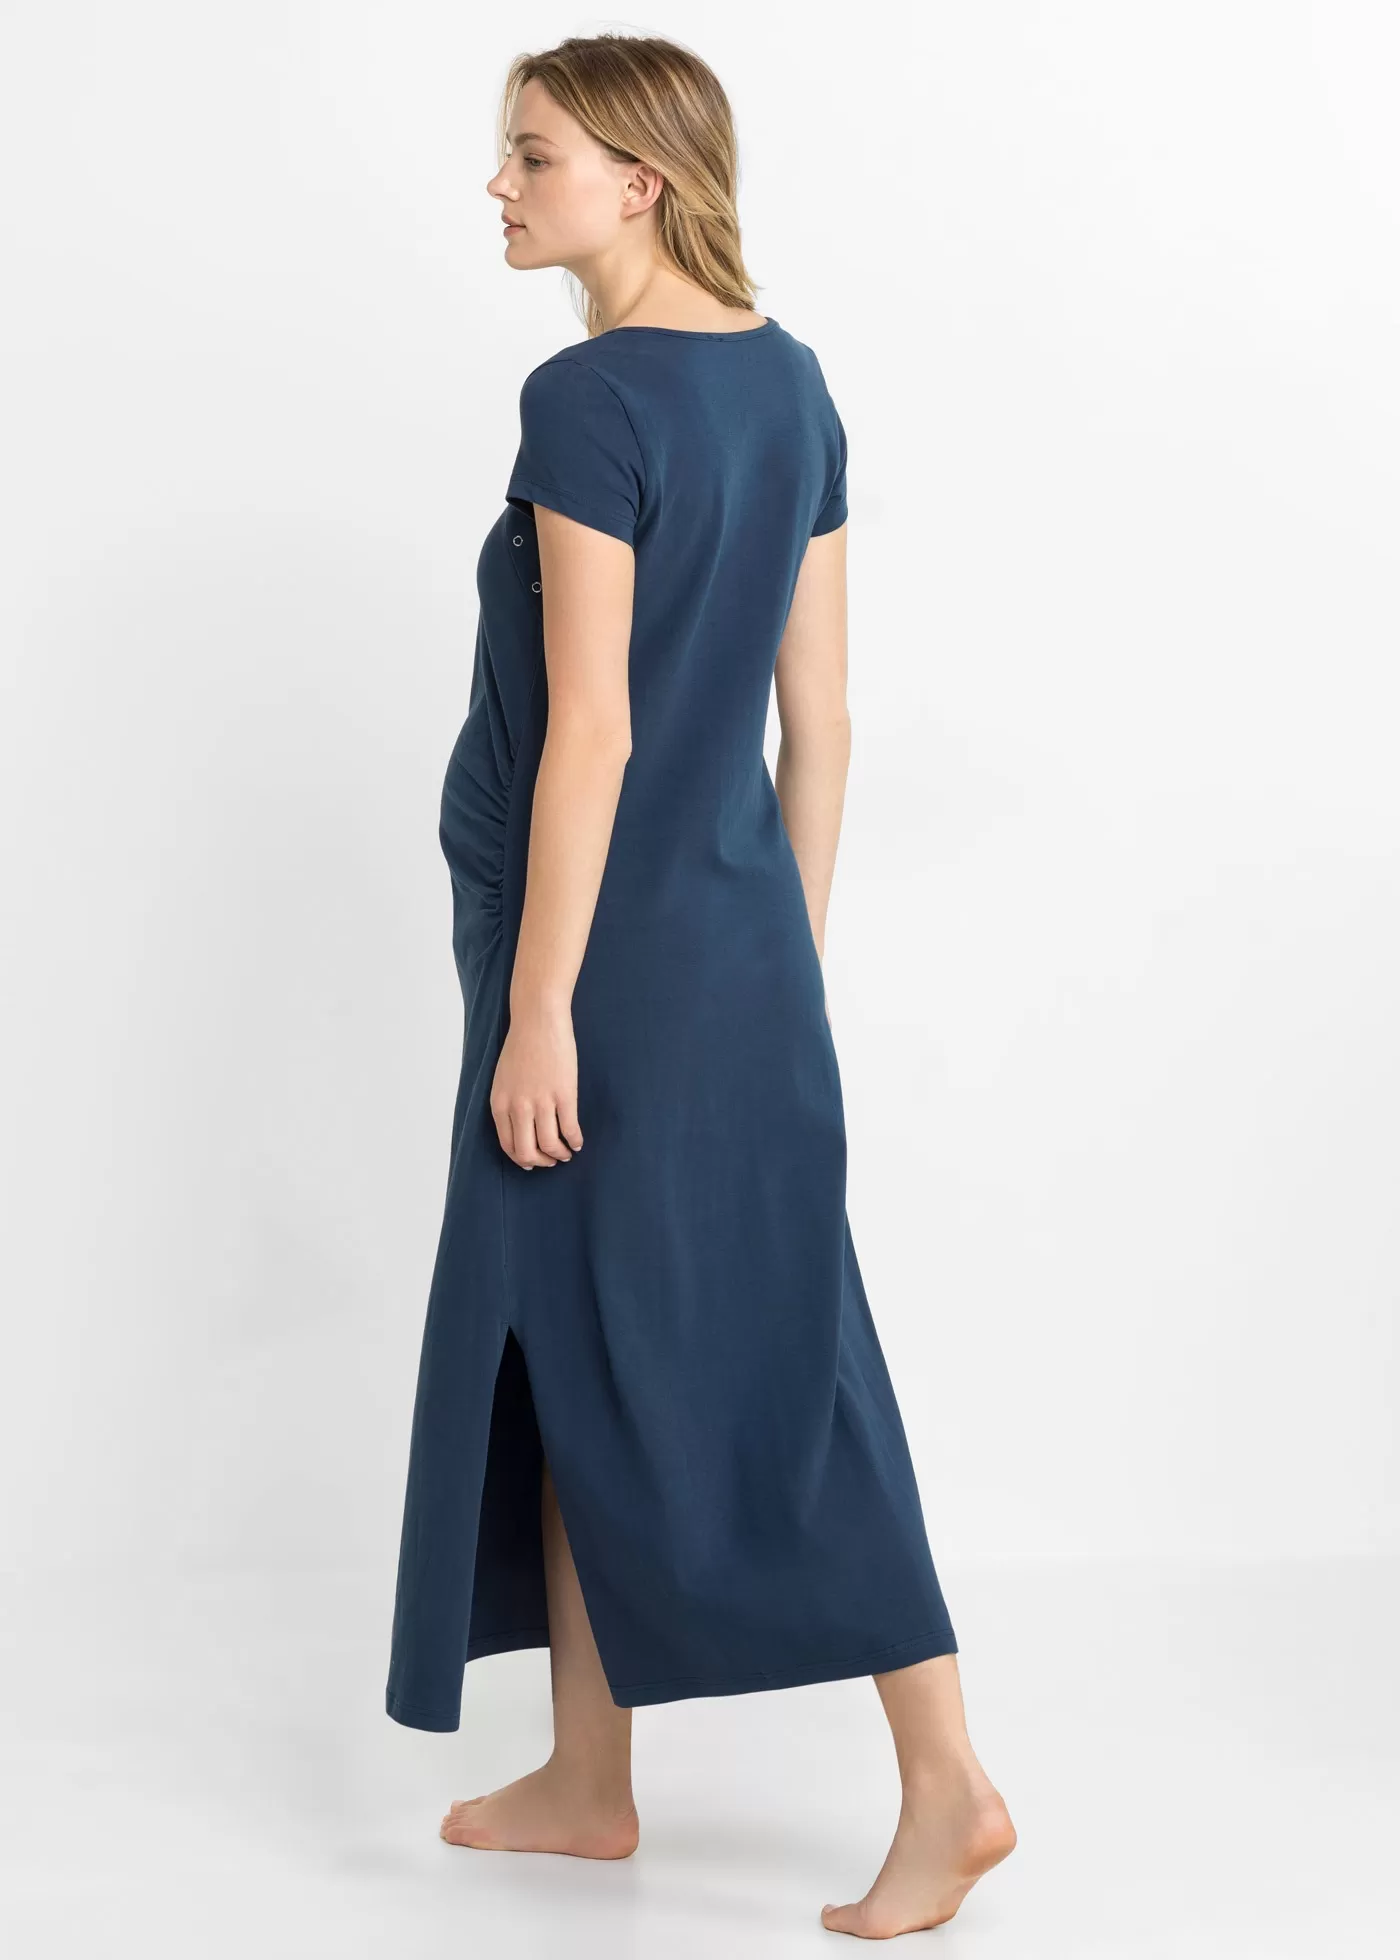 BPC Bonprix – Nightgown with organic cotton